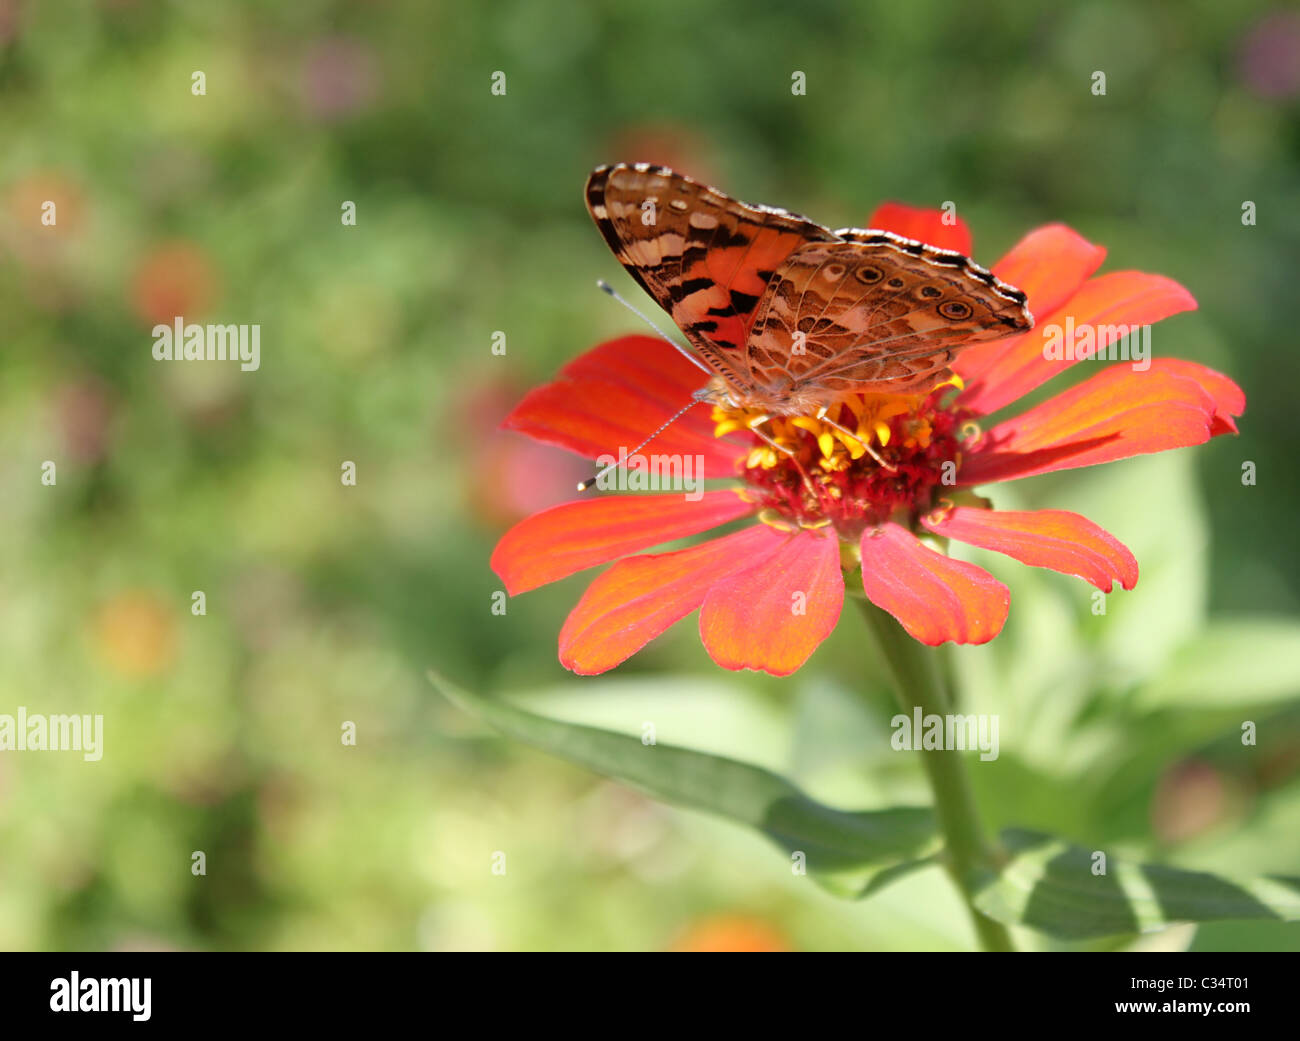 Butterfly (Painted Lady) sentados en flor (zinnia) Foto de stock